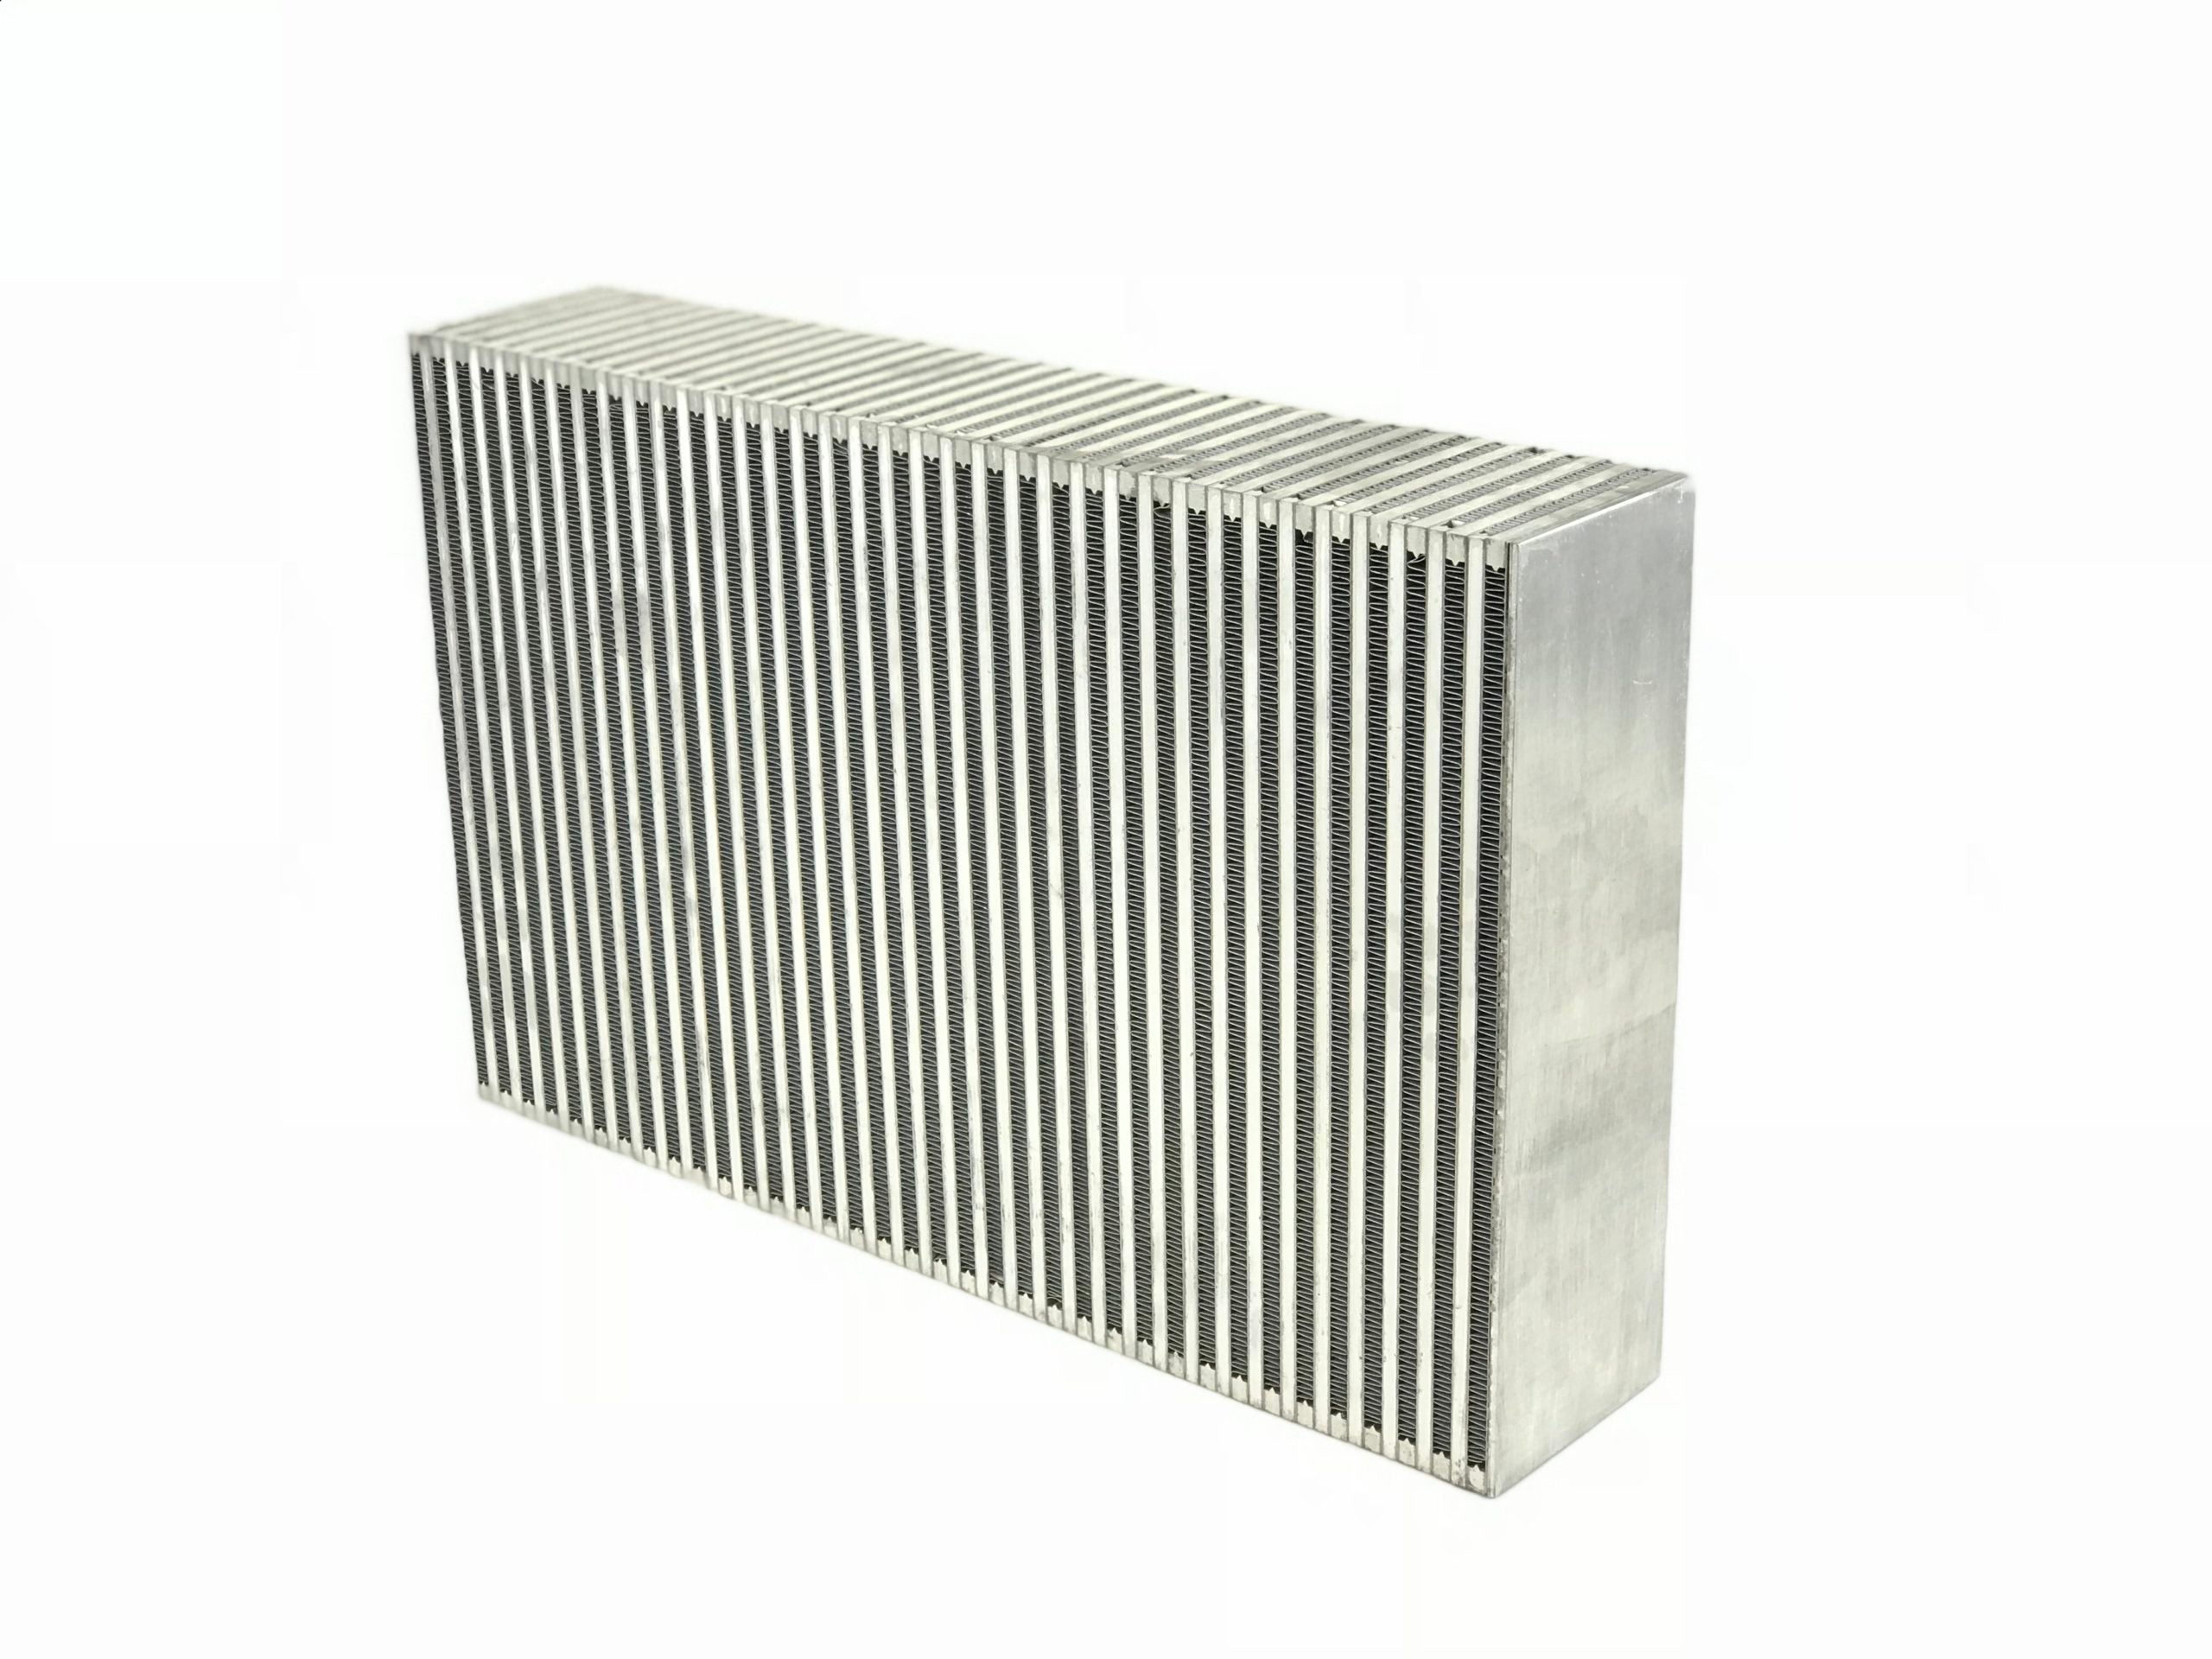 CSF 8117 High Performance Bar&plate intercooler core 22x14x4.5 (Vertical Flow) for NISSAN GT-R (R35) 2009- Photo-1 